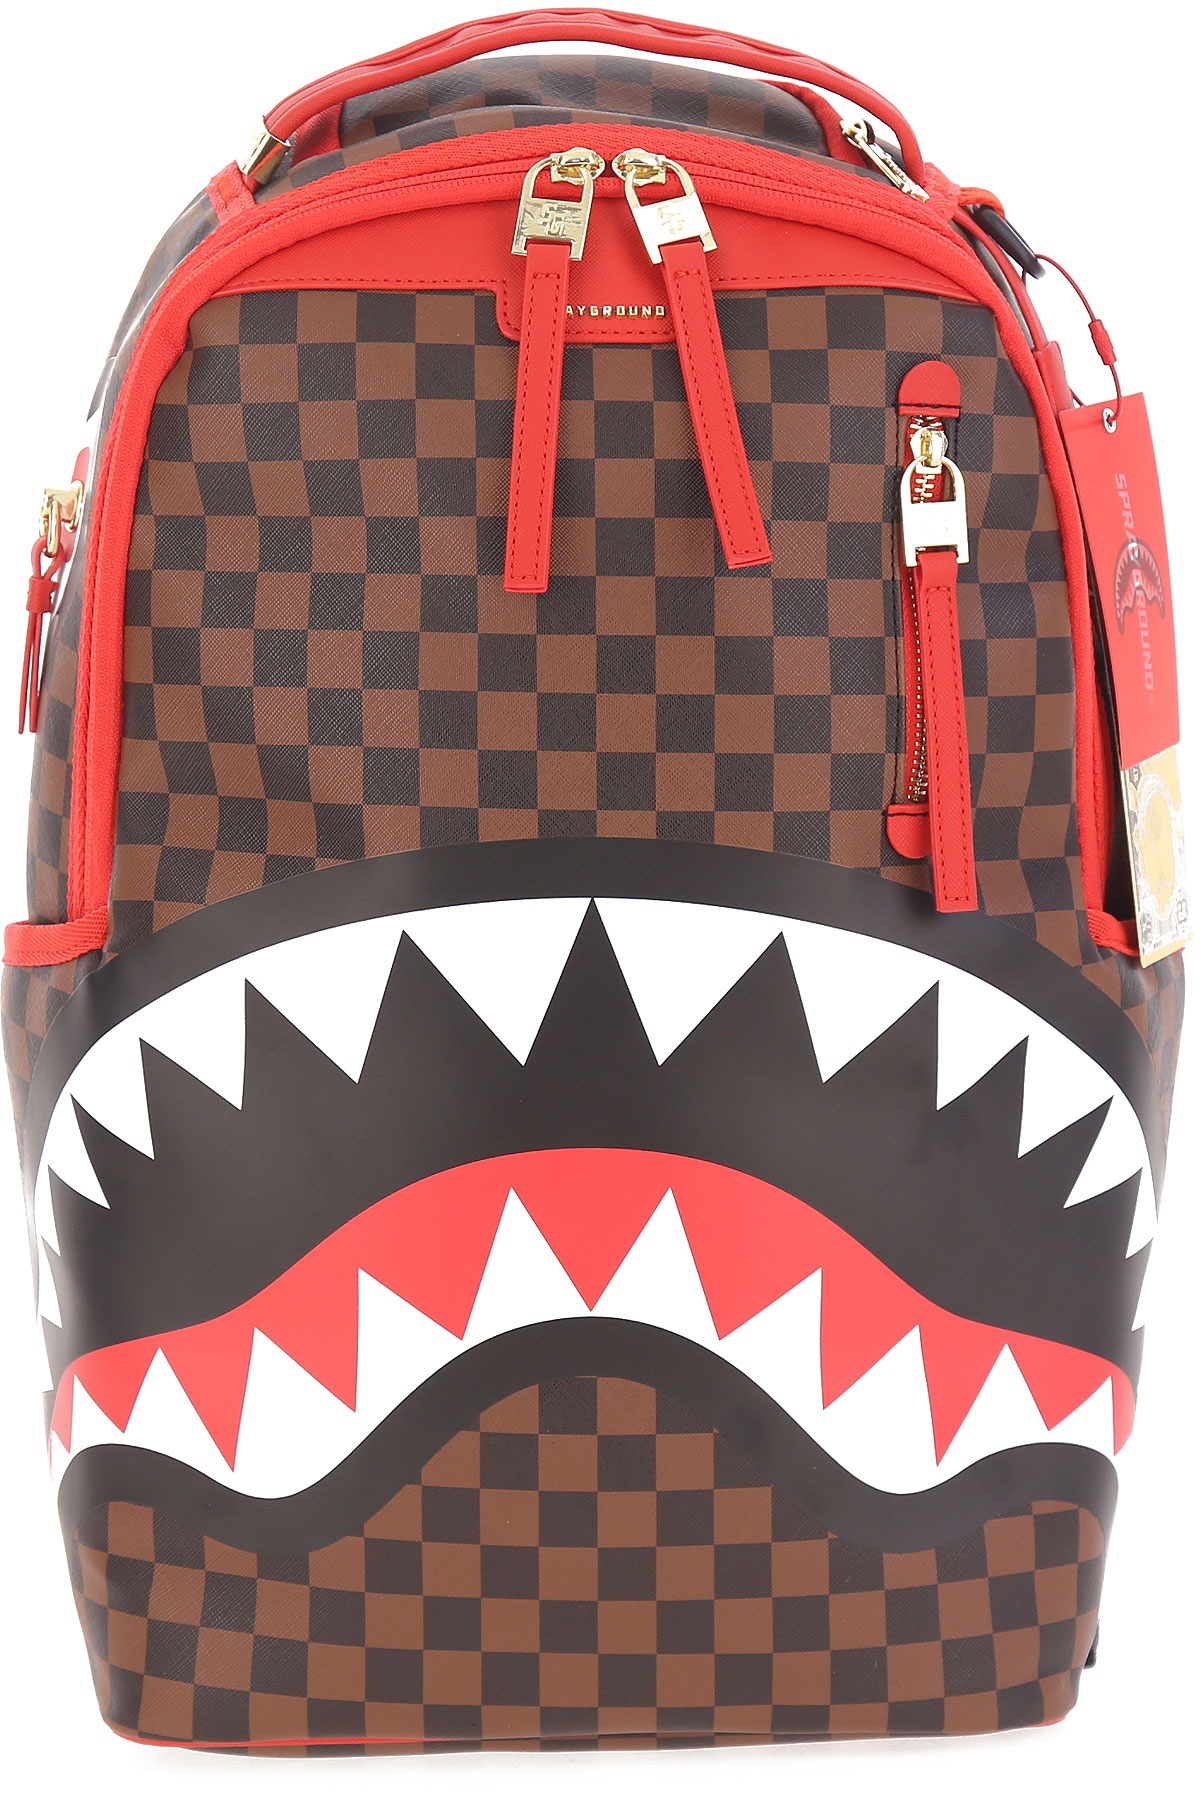 Handbags Sprayground, Style code: 910b5406nsz